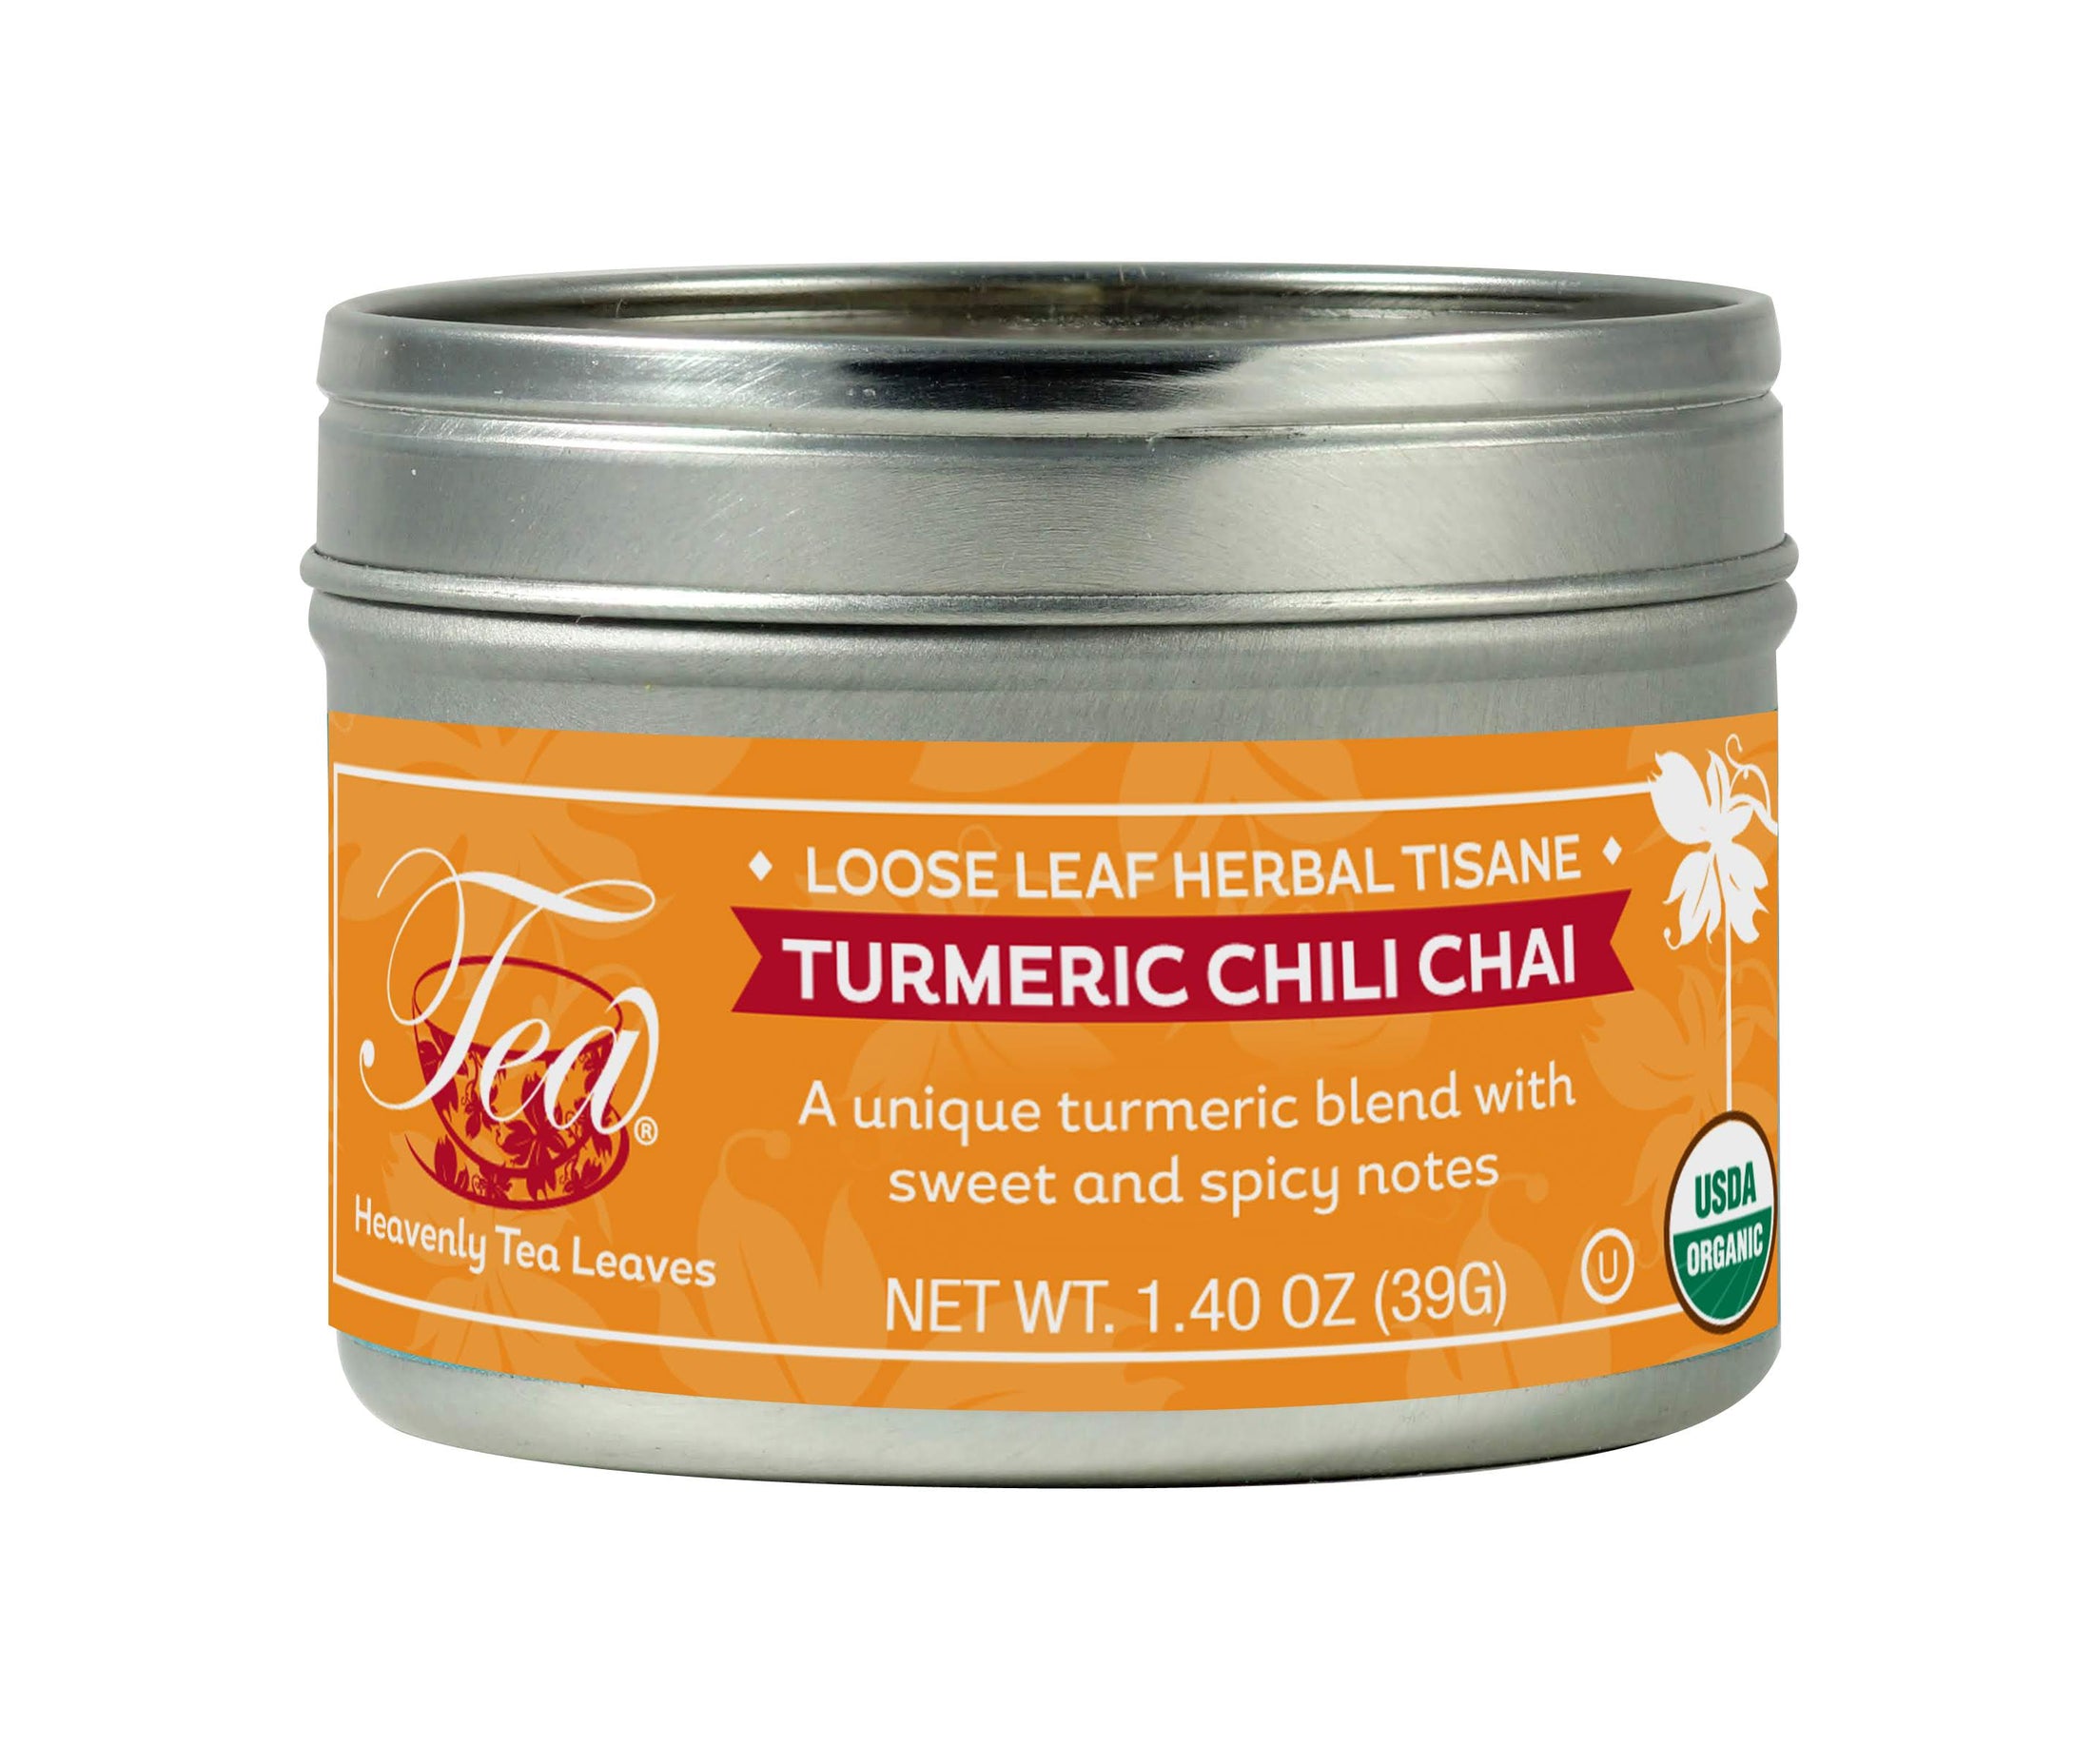 Organic Turmeric Chili Chai (Golden Milk), Loose Leaf Herbal Tea Tin - Cleansing, Detoxifying, Throat Soothing - Heavenly Tea Leaves